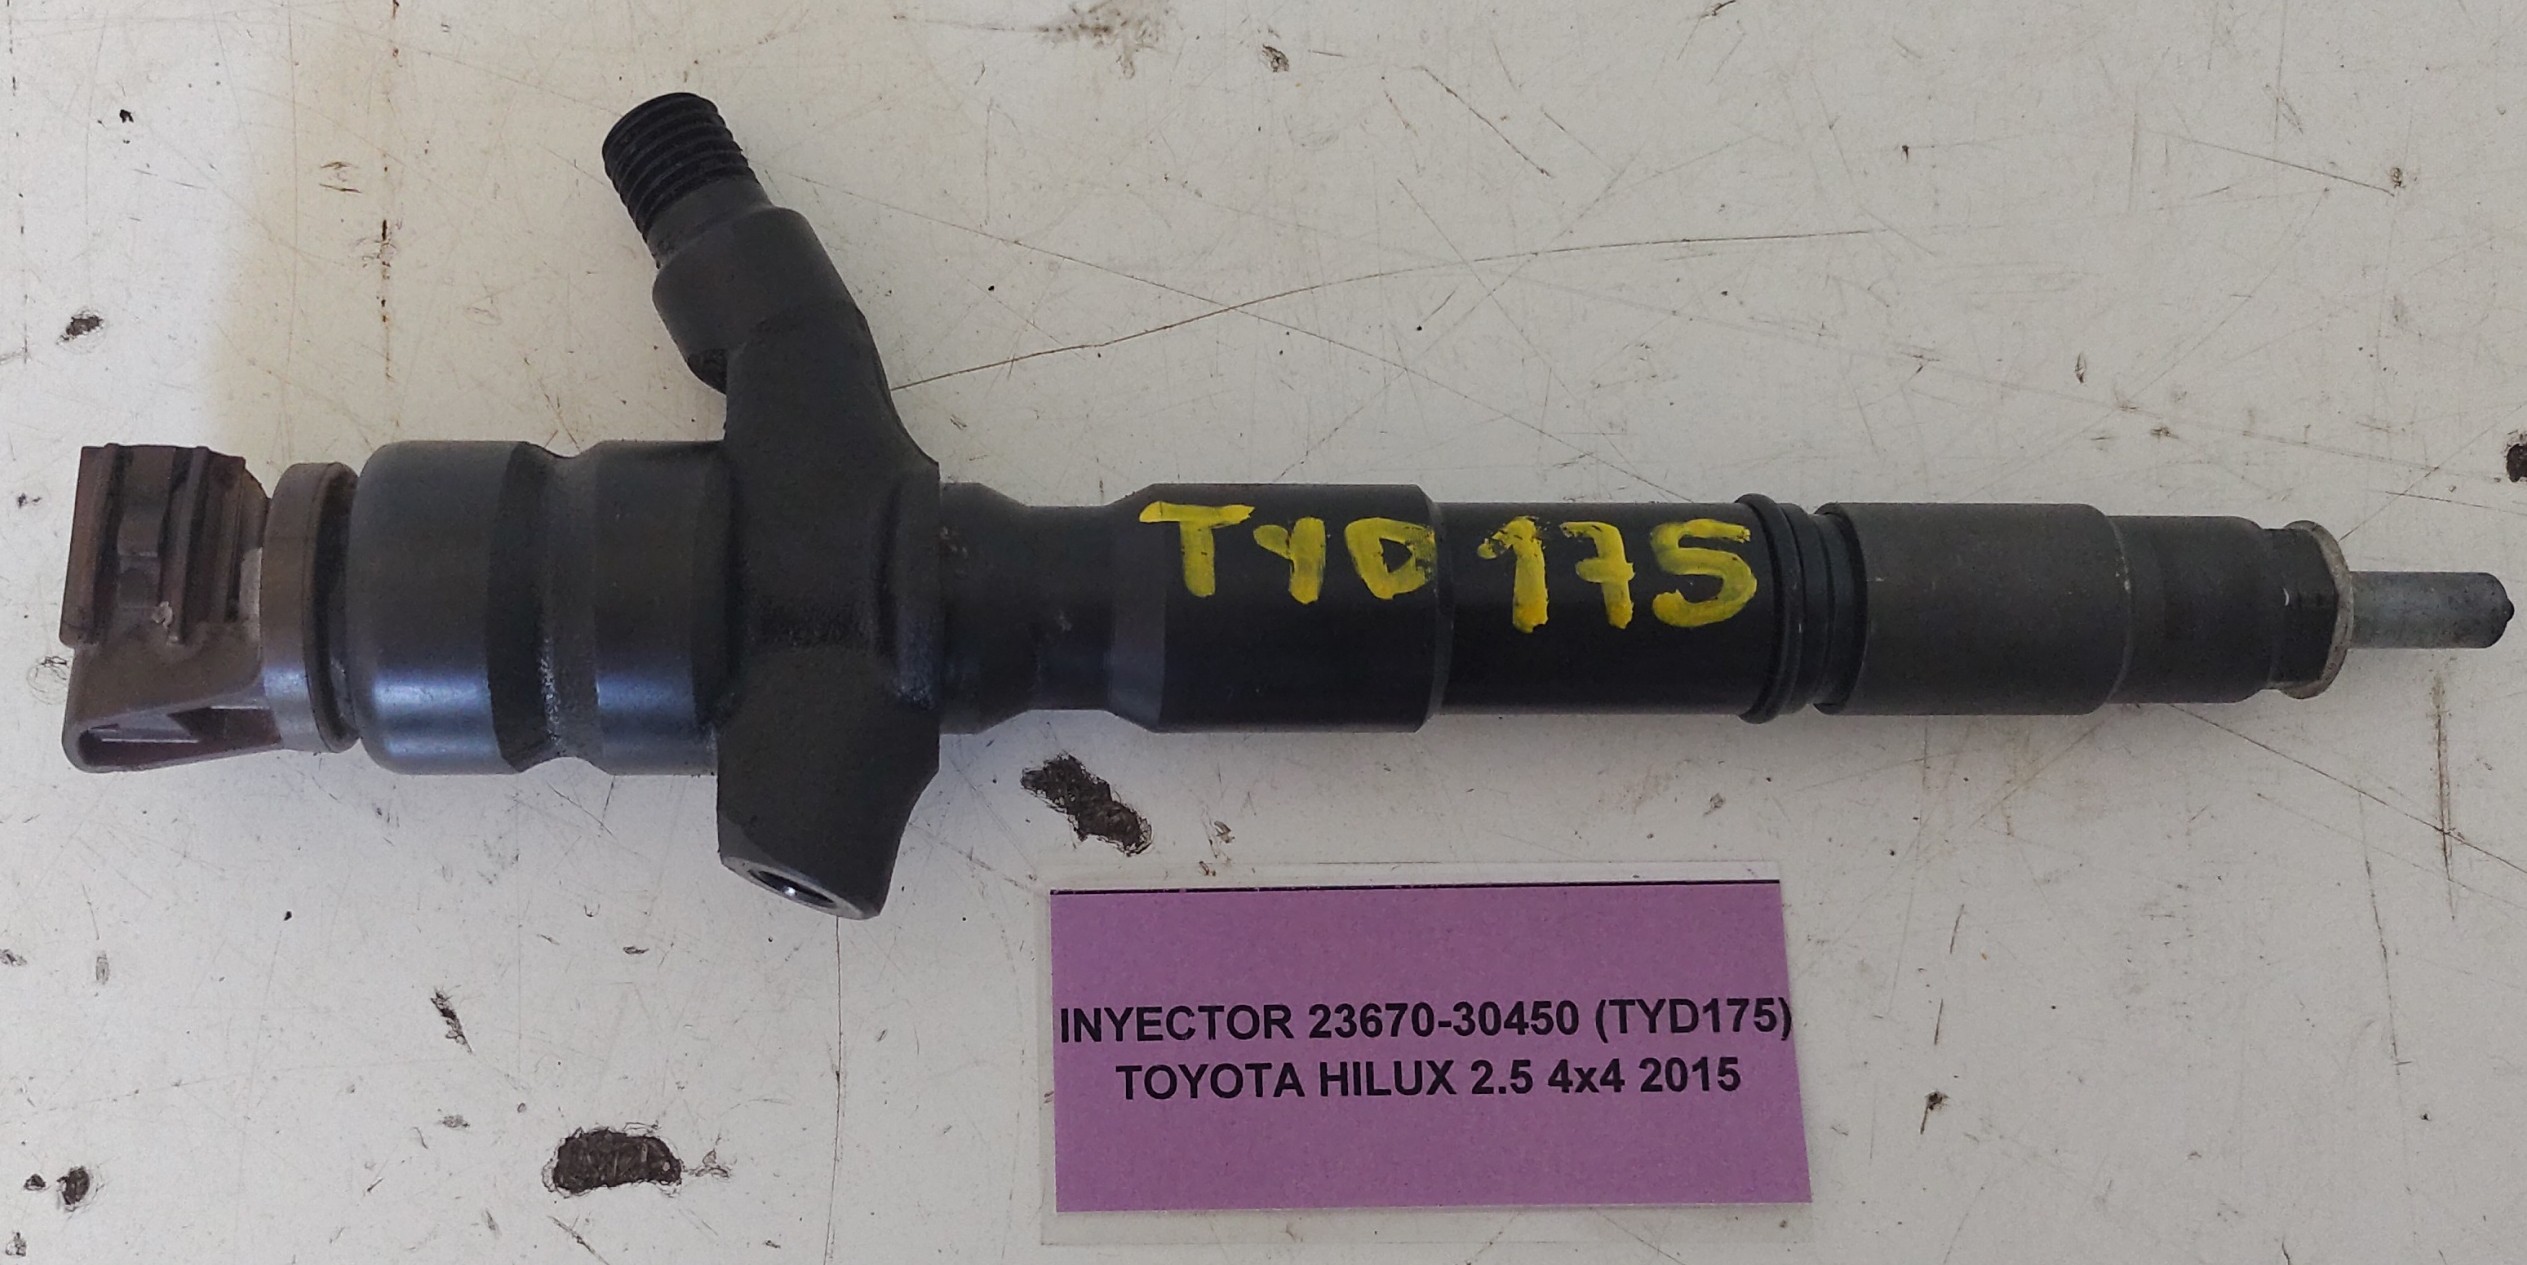 Inyector 23670-30450 (TYD175) Toyota Hilux 2.5 4×4 2015 $200.000 + IVA